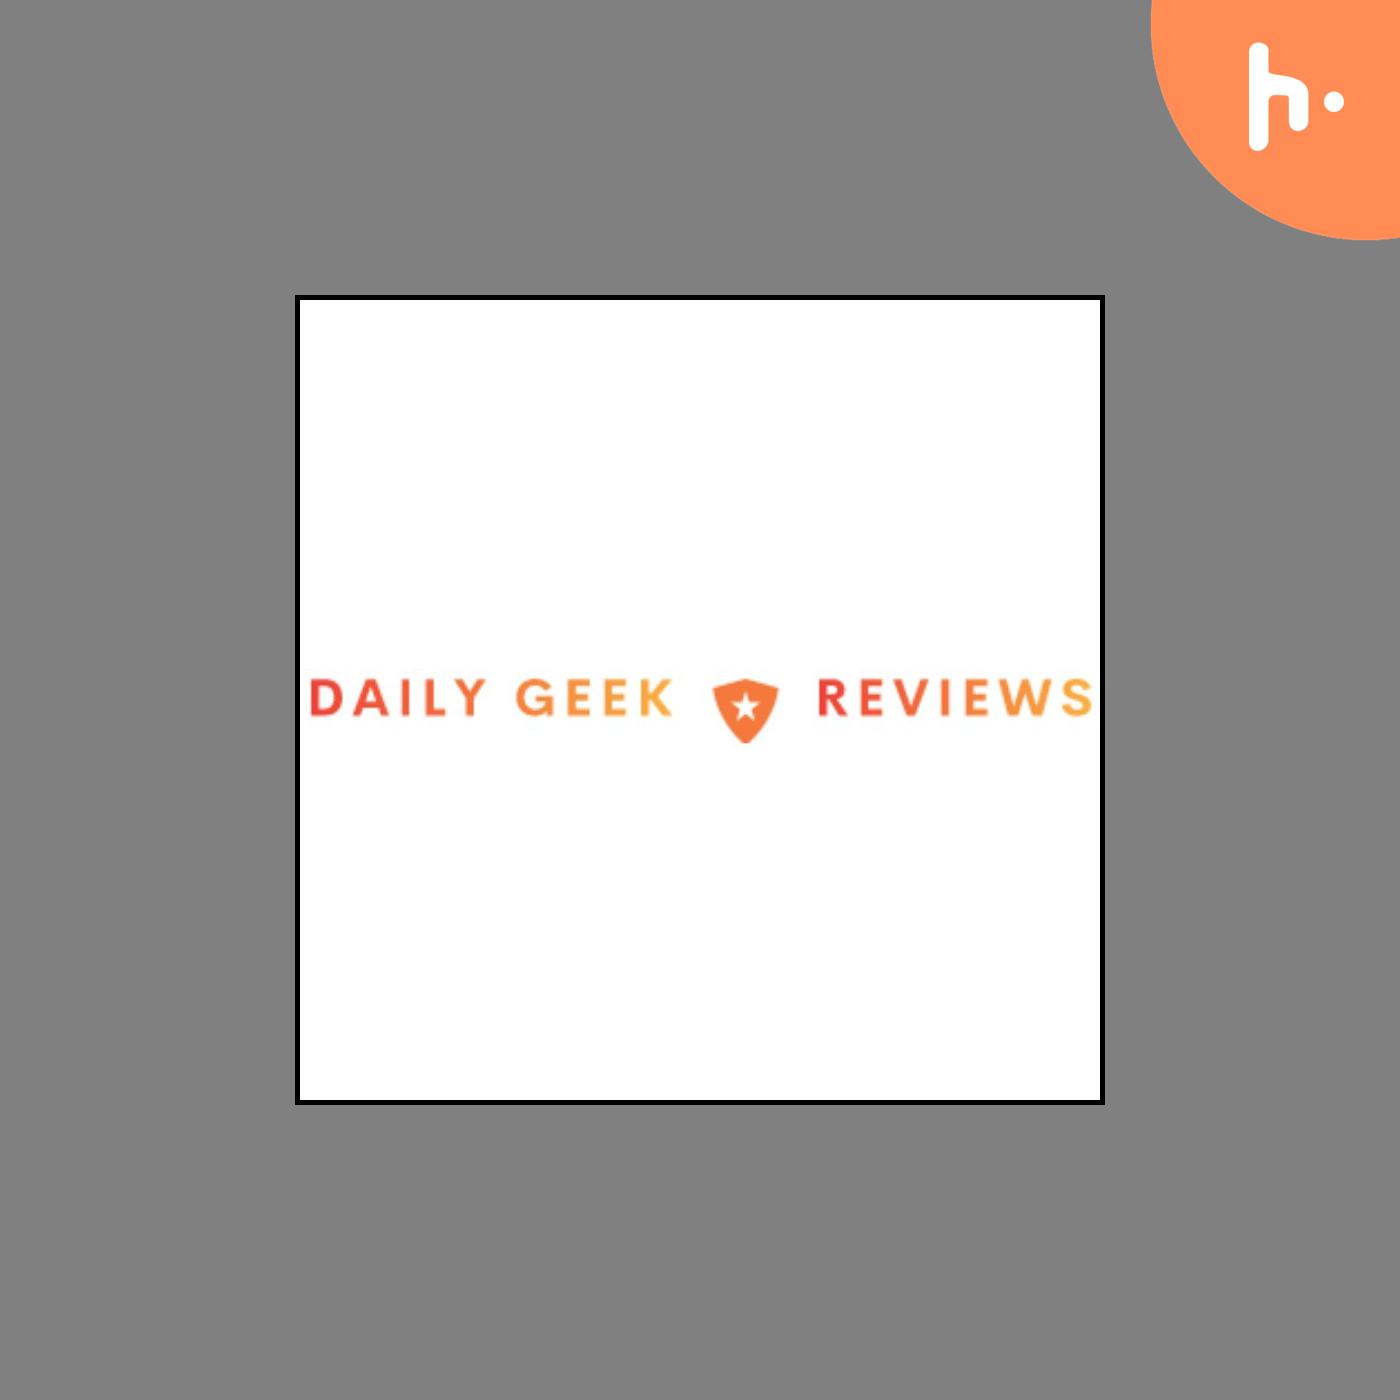 Daily Geek Reviews